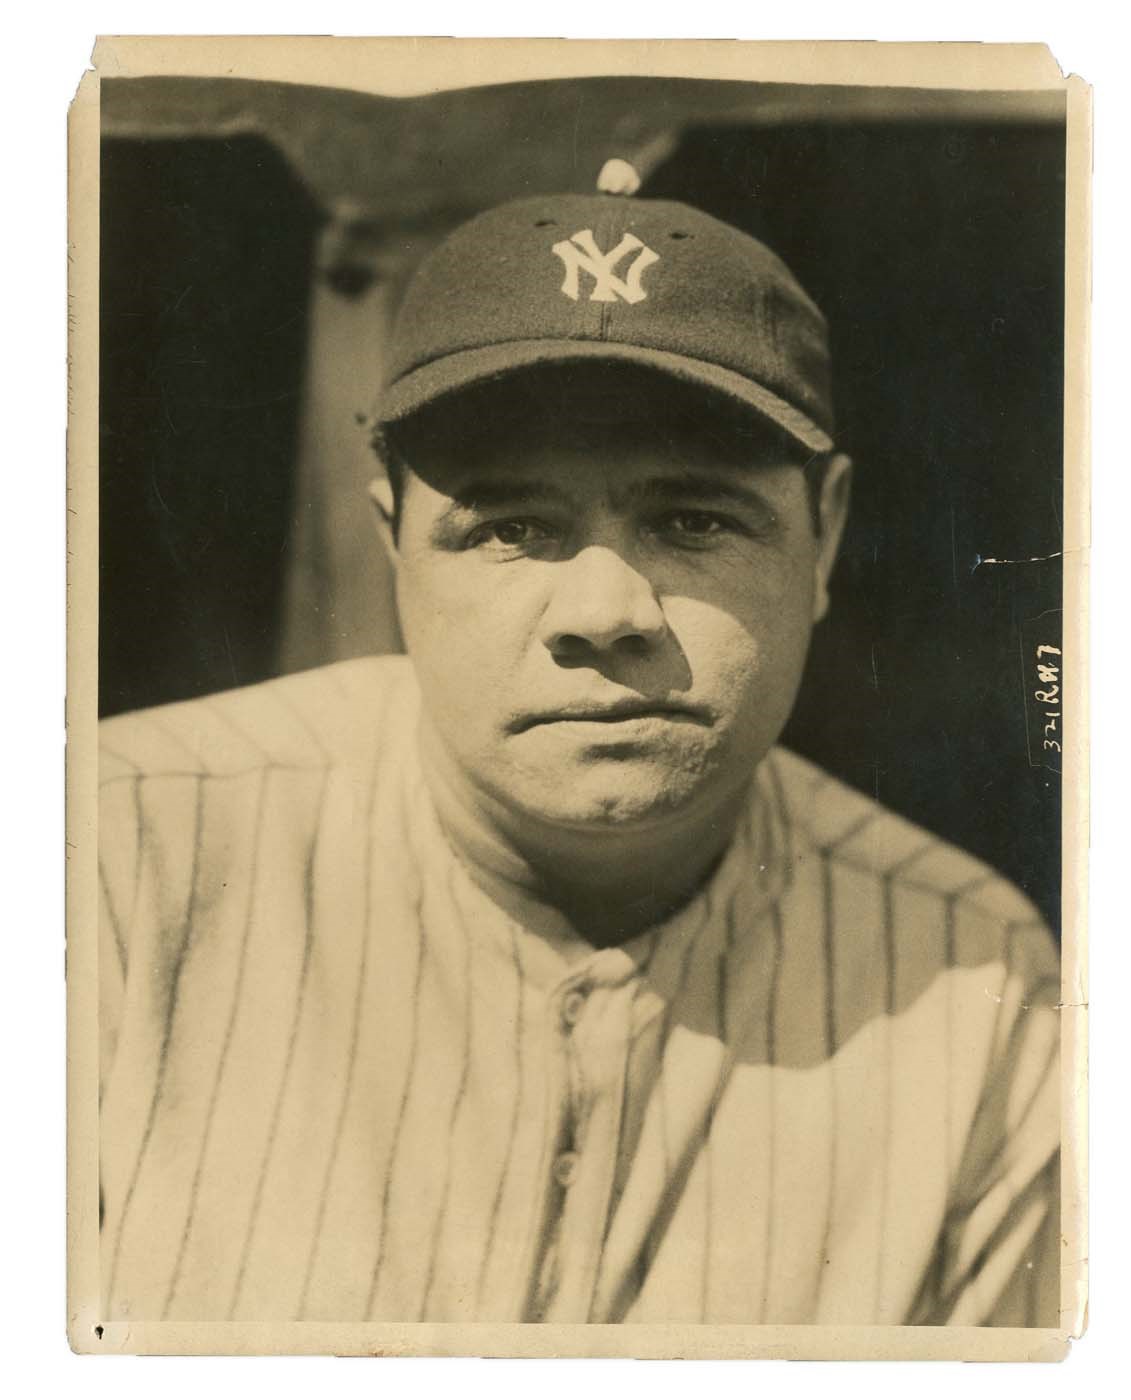 - 1924 Babe Ruth "Gum on Cap" Type I Photograph by Charles Conlon